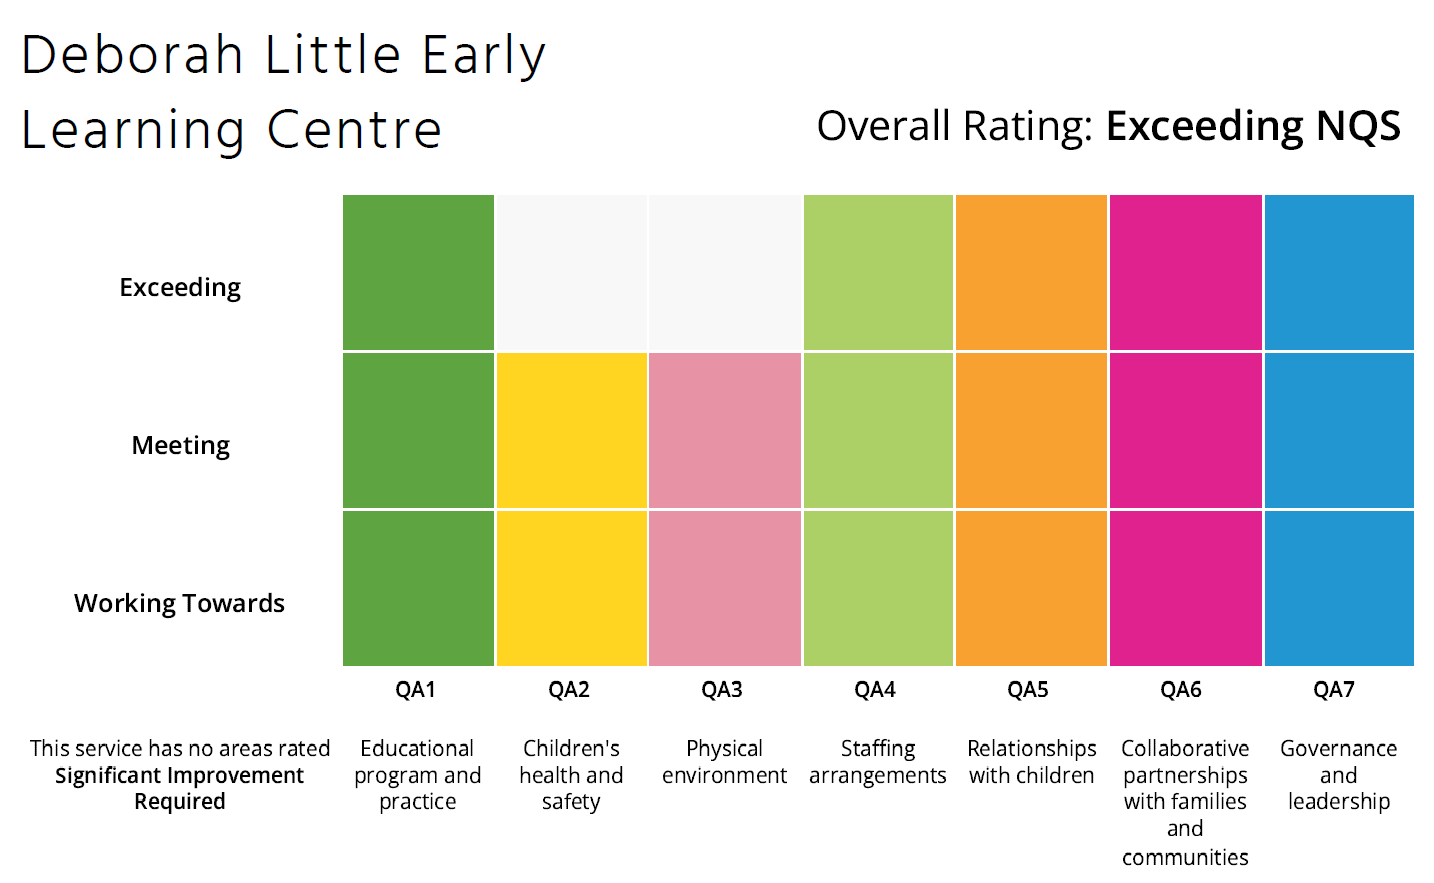 ACECQA Ratings Chart - Deborah Little